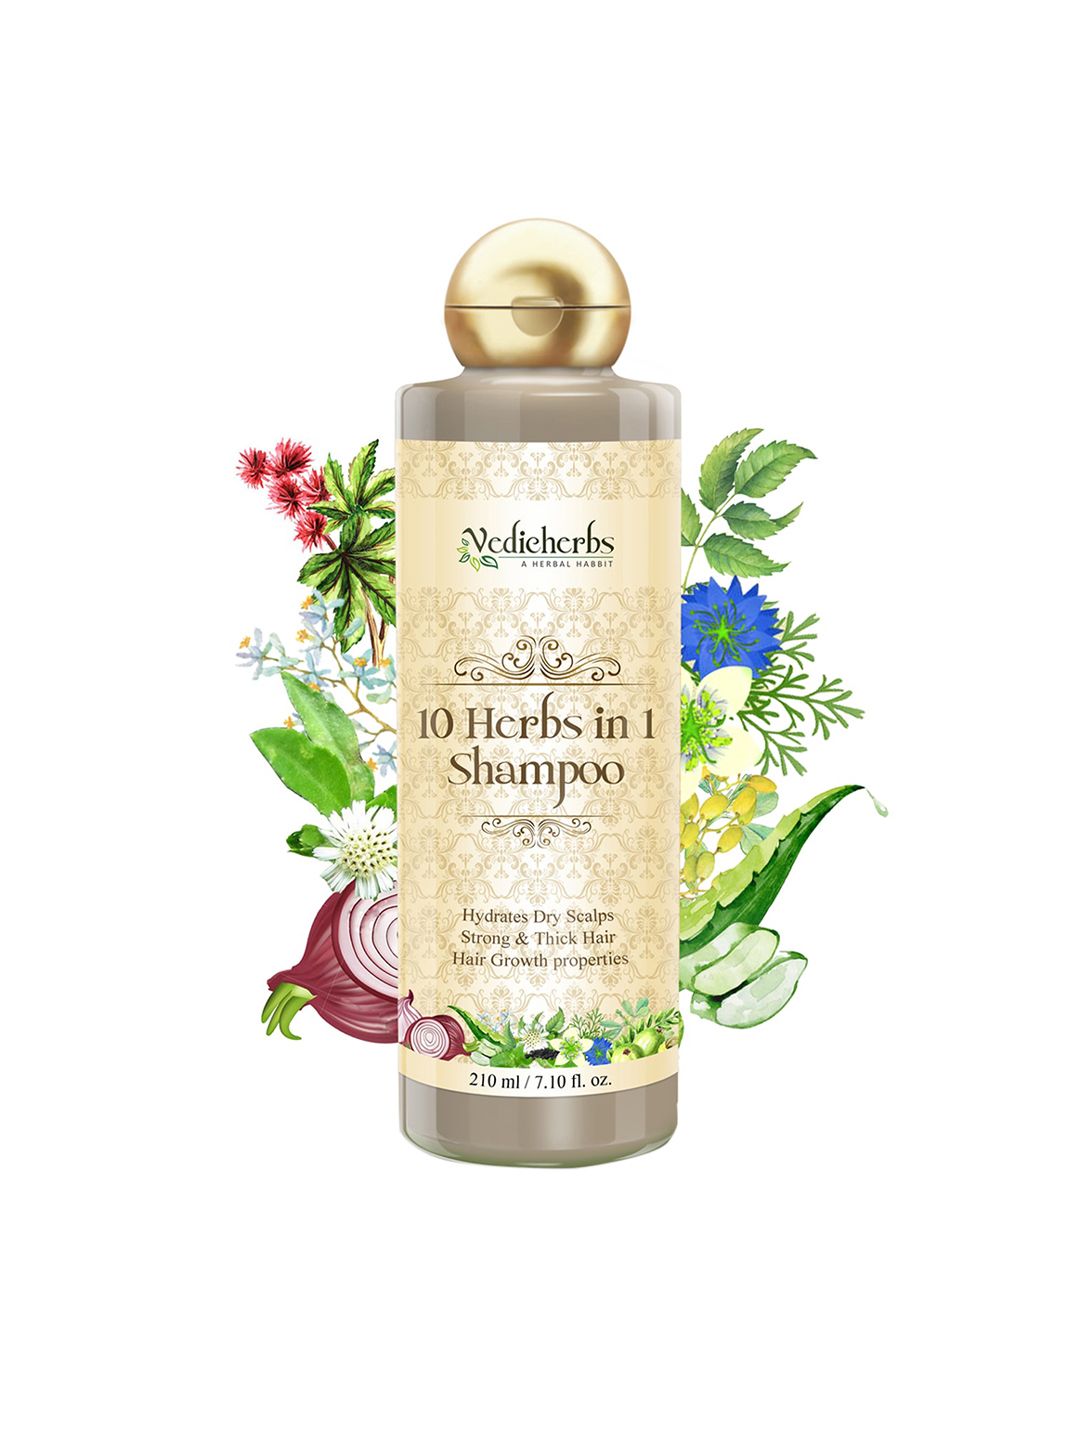 Vedicherbs 10 Herbs in 1 Shampoo 210ml Price in India